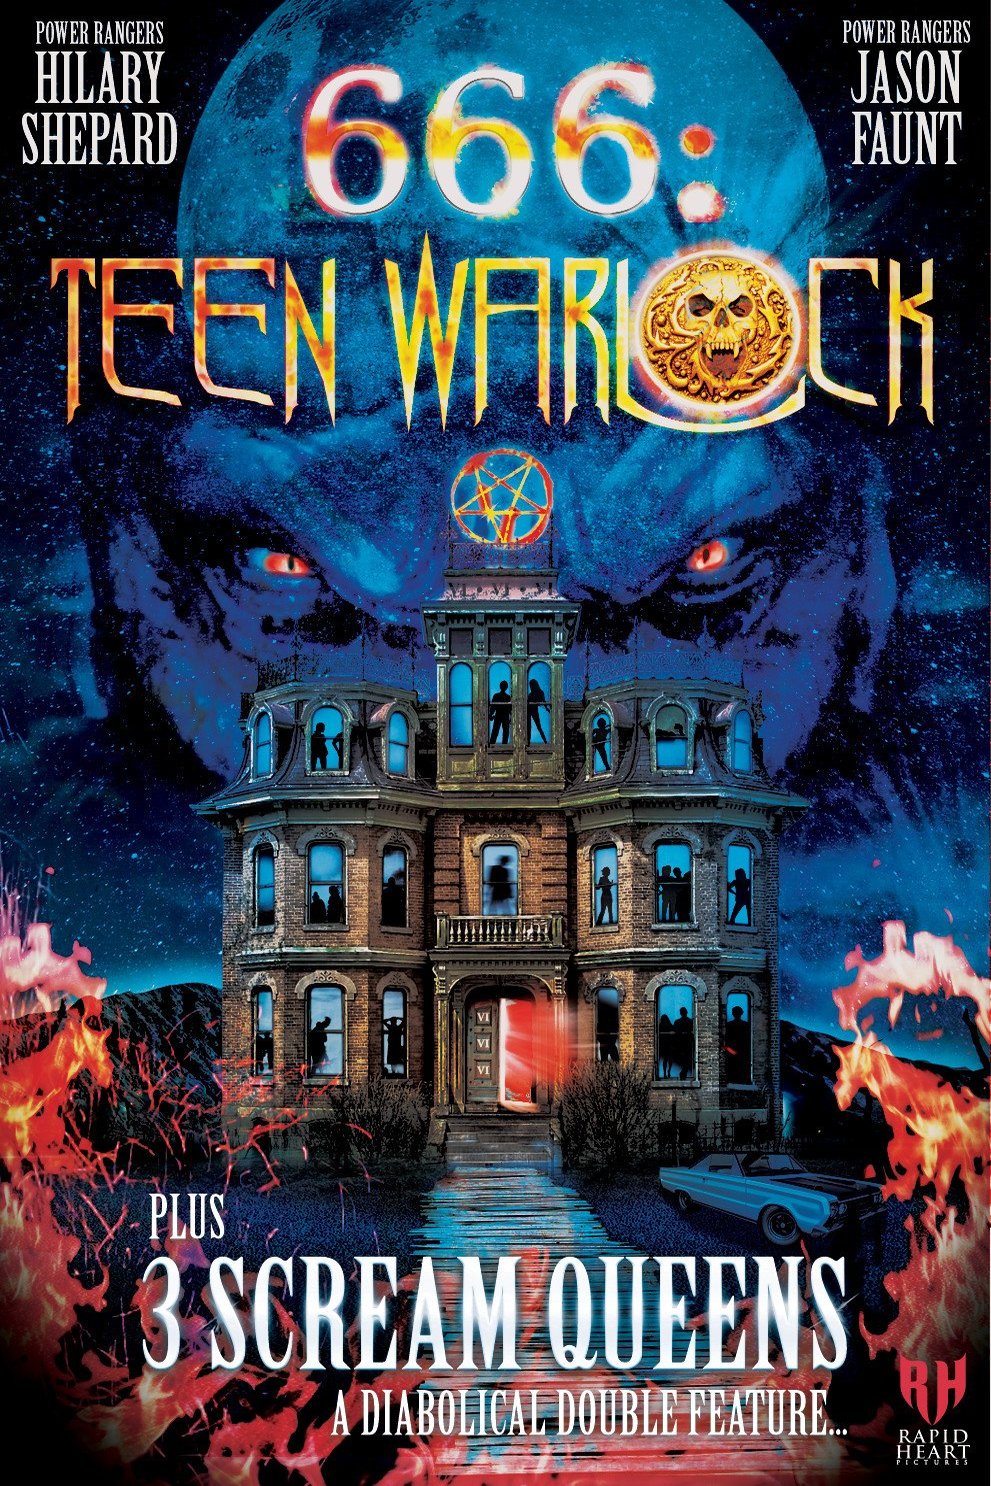 Poster of the movie 666: Teen Warlock